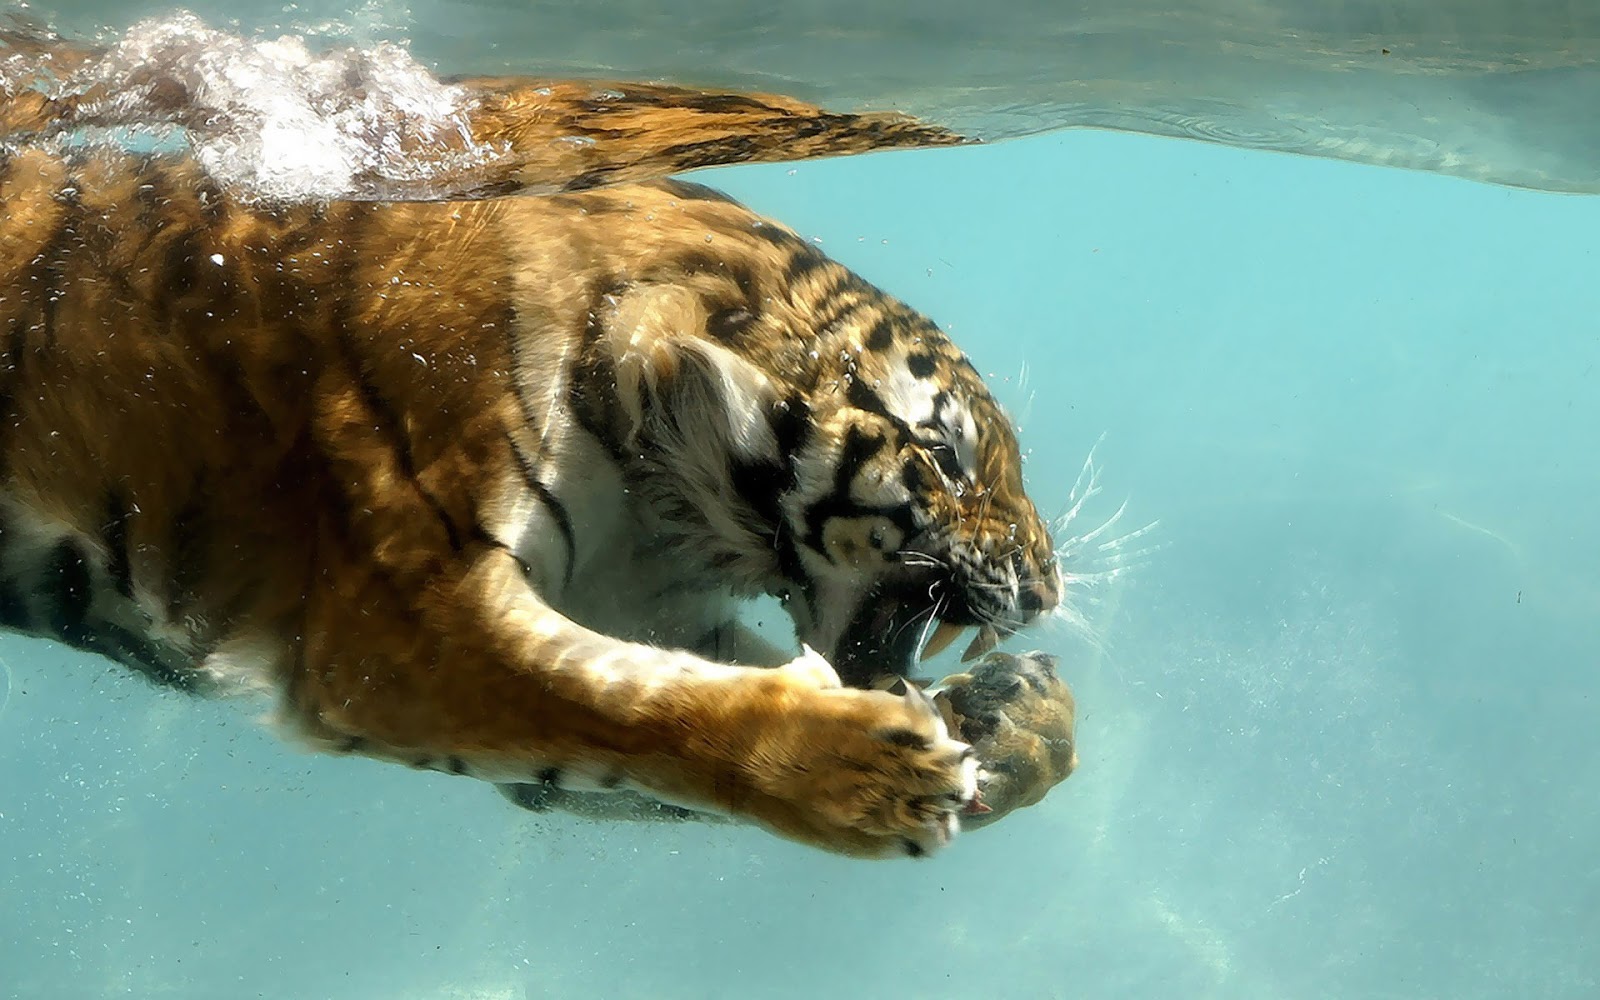 http://2.bp.blogspot.com/-P5x7QR18SpM/UQpyaM-q33I/AAAAAAAAMK8/rm5iPUp30Ik/s1600/foto-van-een-onderwater-zwemmende-tijger-hd-dieren-achtergronden.jpg